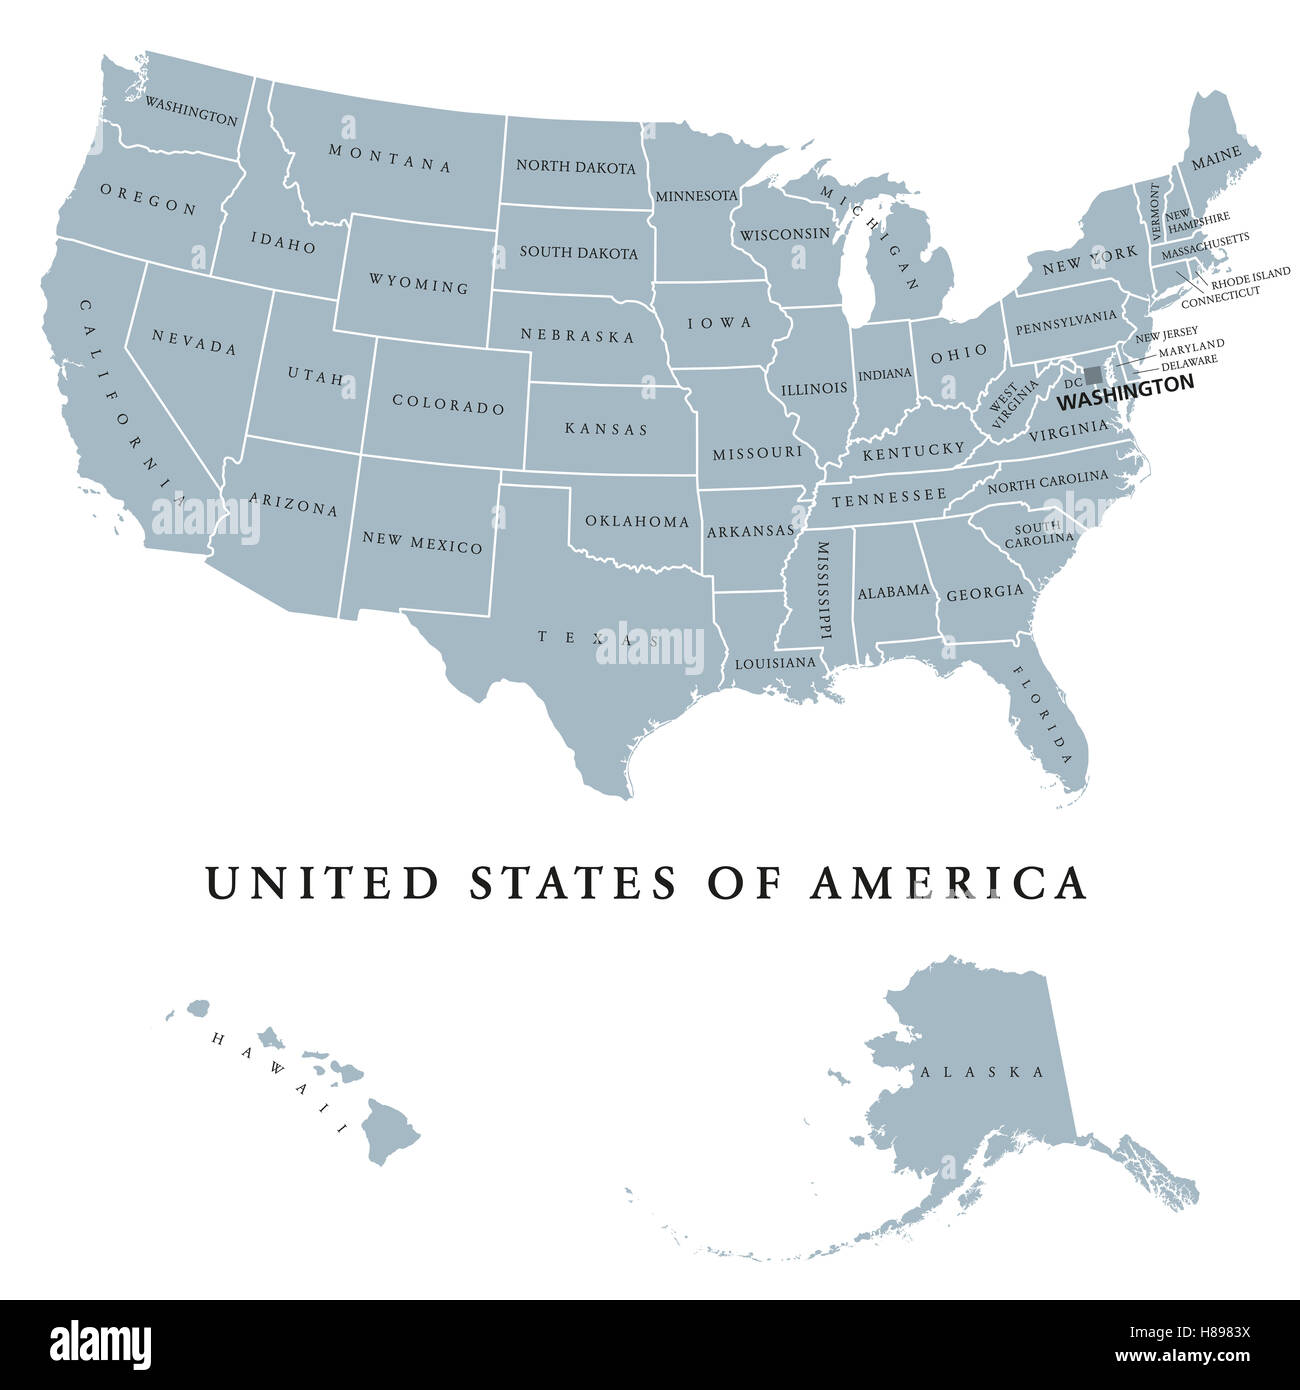 USA United States of America politique tracer avec capital Washington. Les états américains, y compris l'Alaska et Hawaï. Banque D'Images